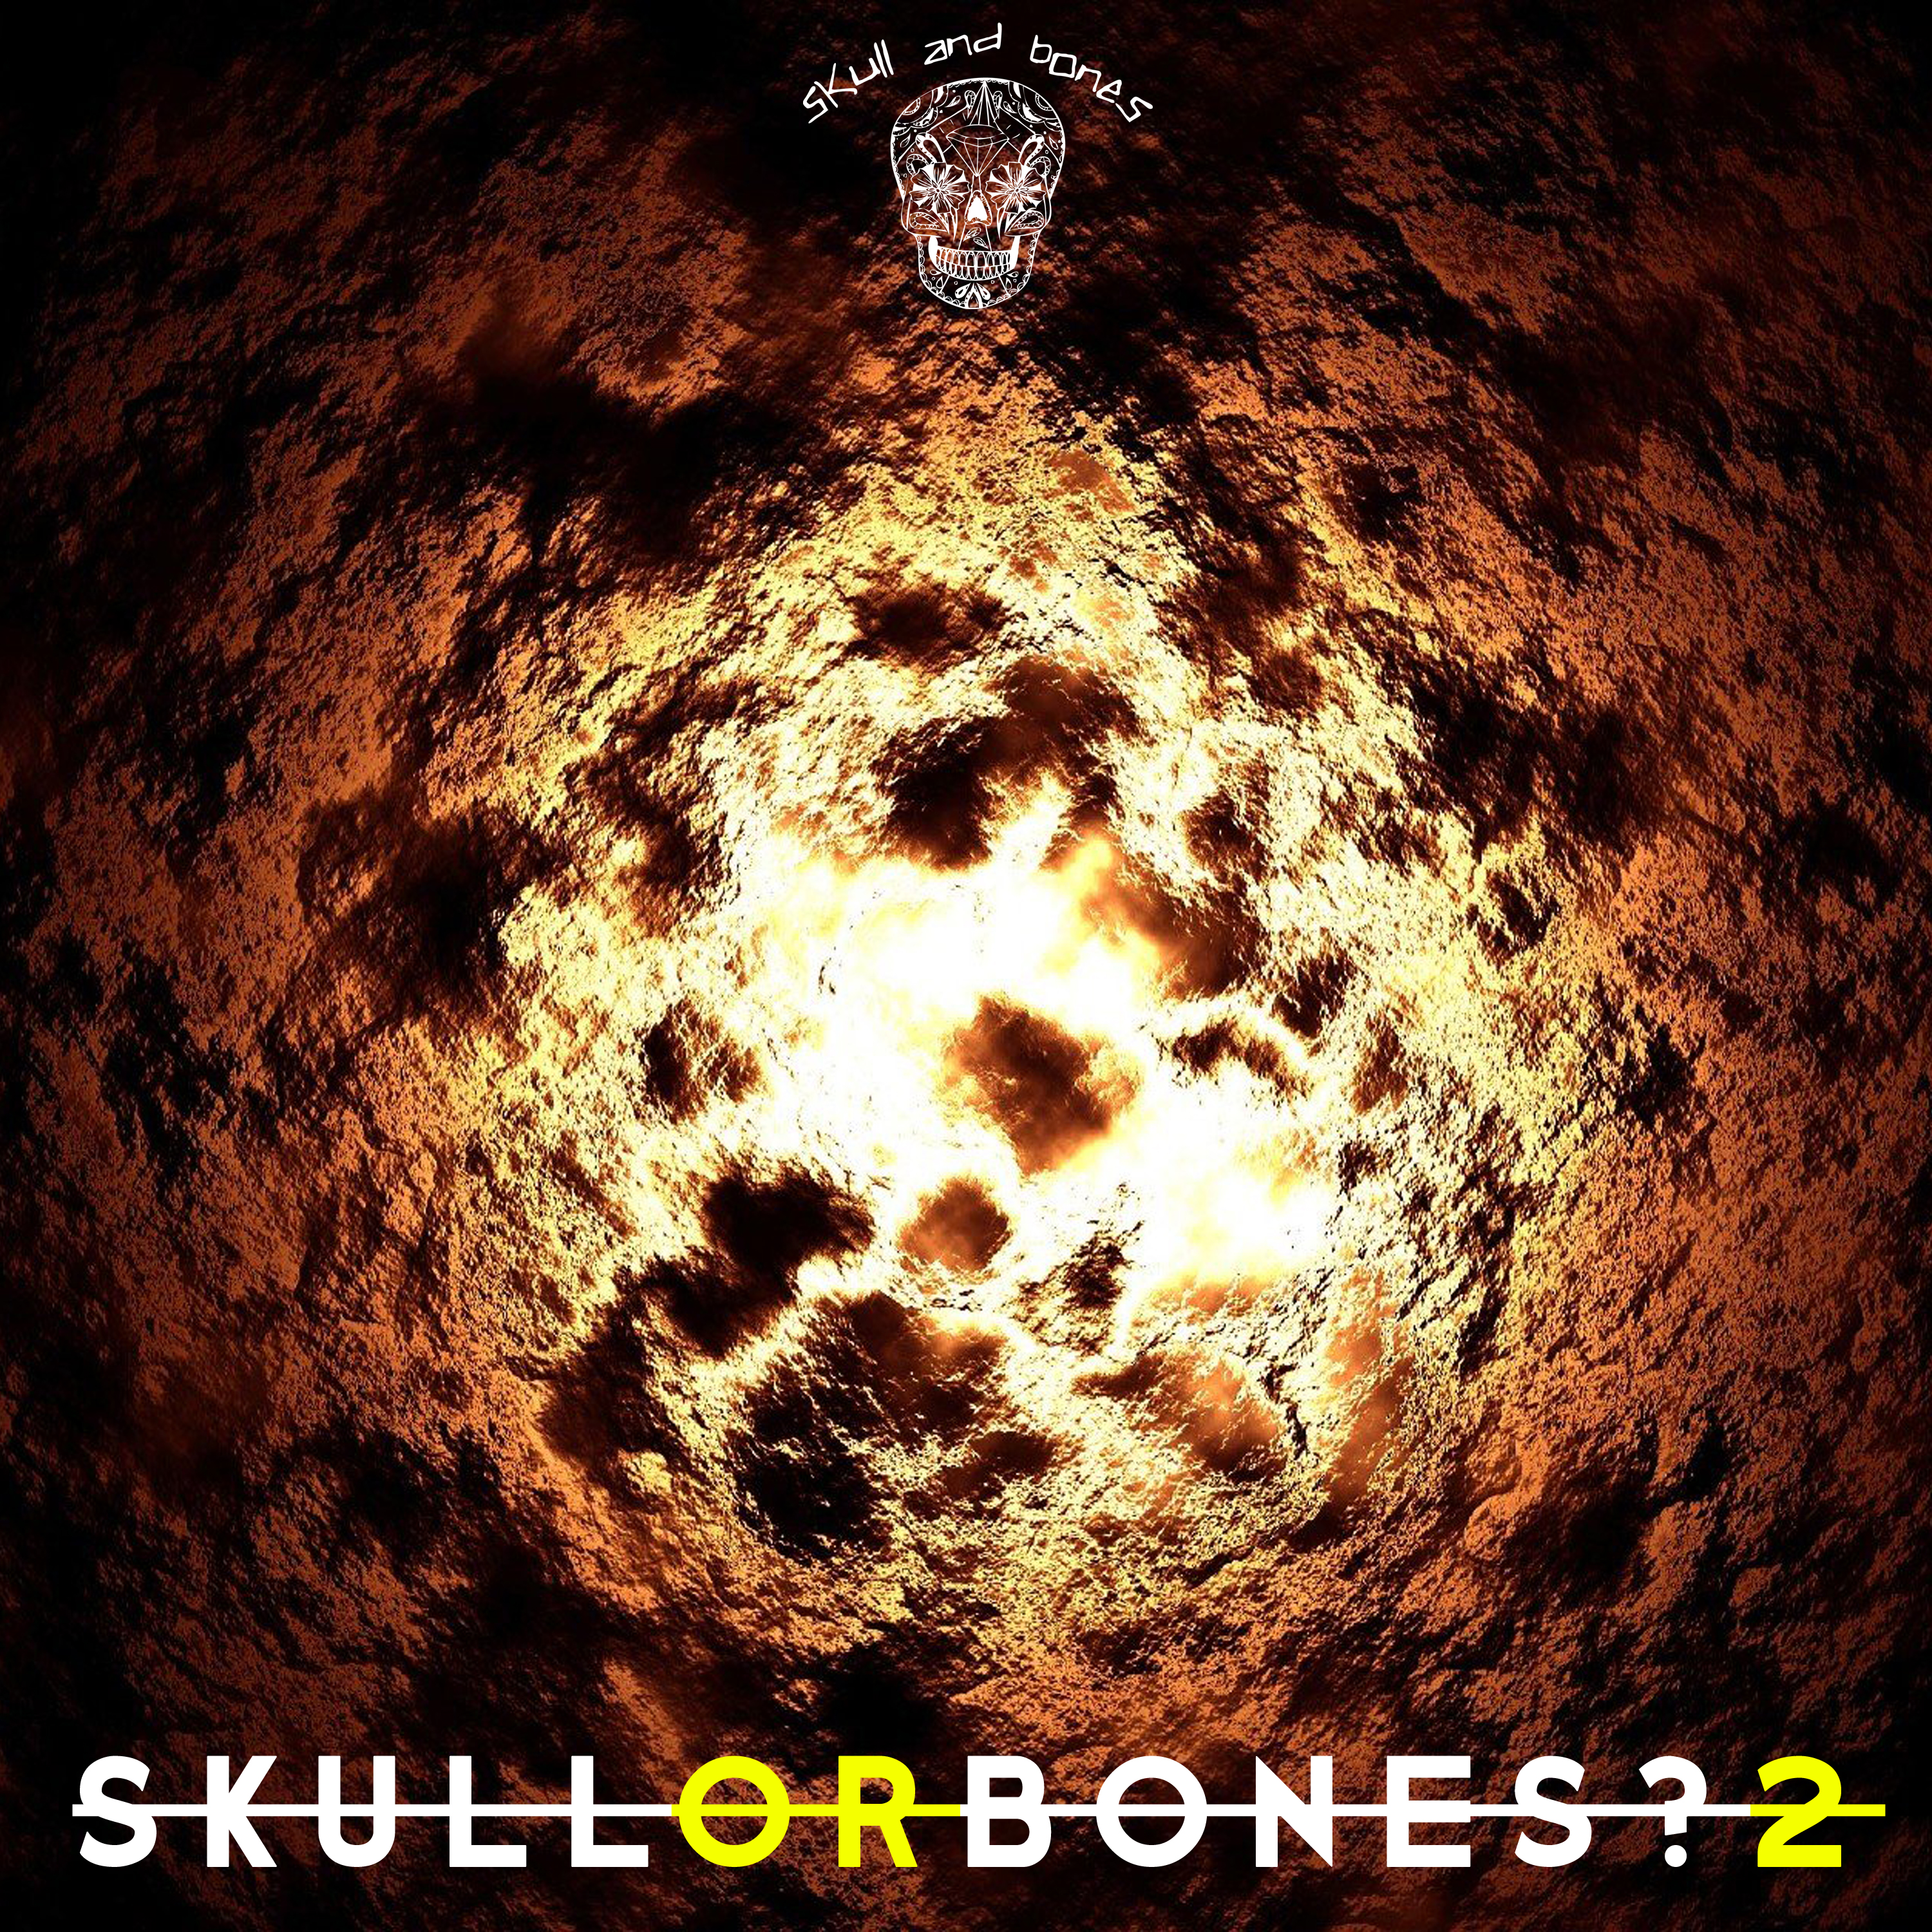 Skull or Bones? 2